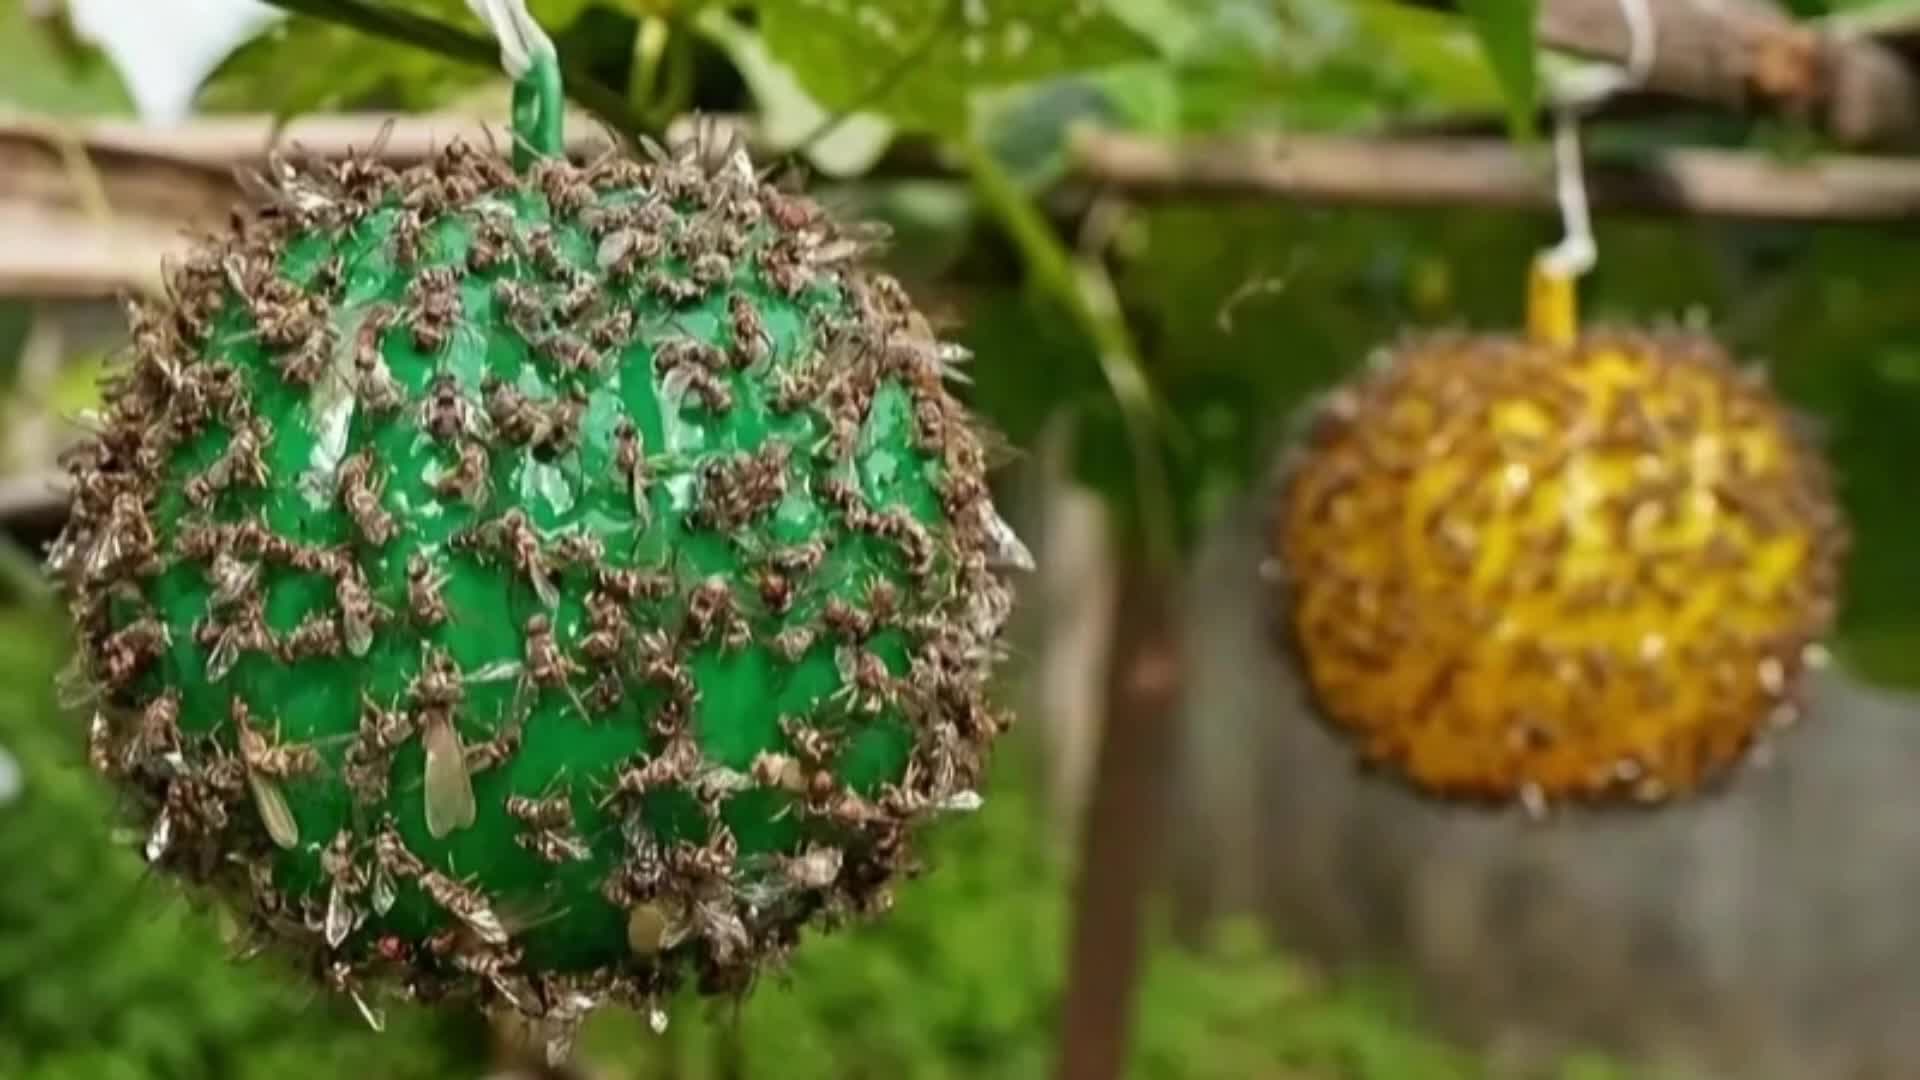 Cute Ball Design Sticky Traps: Capture Fruit Flies - Temu